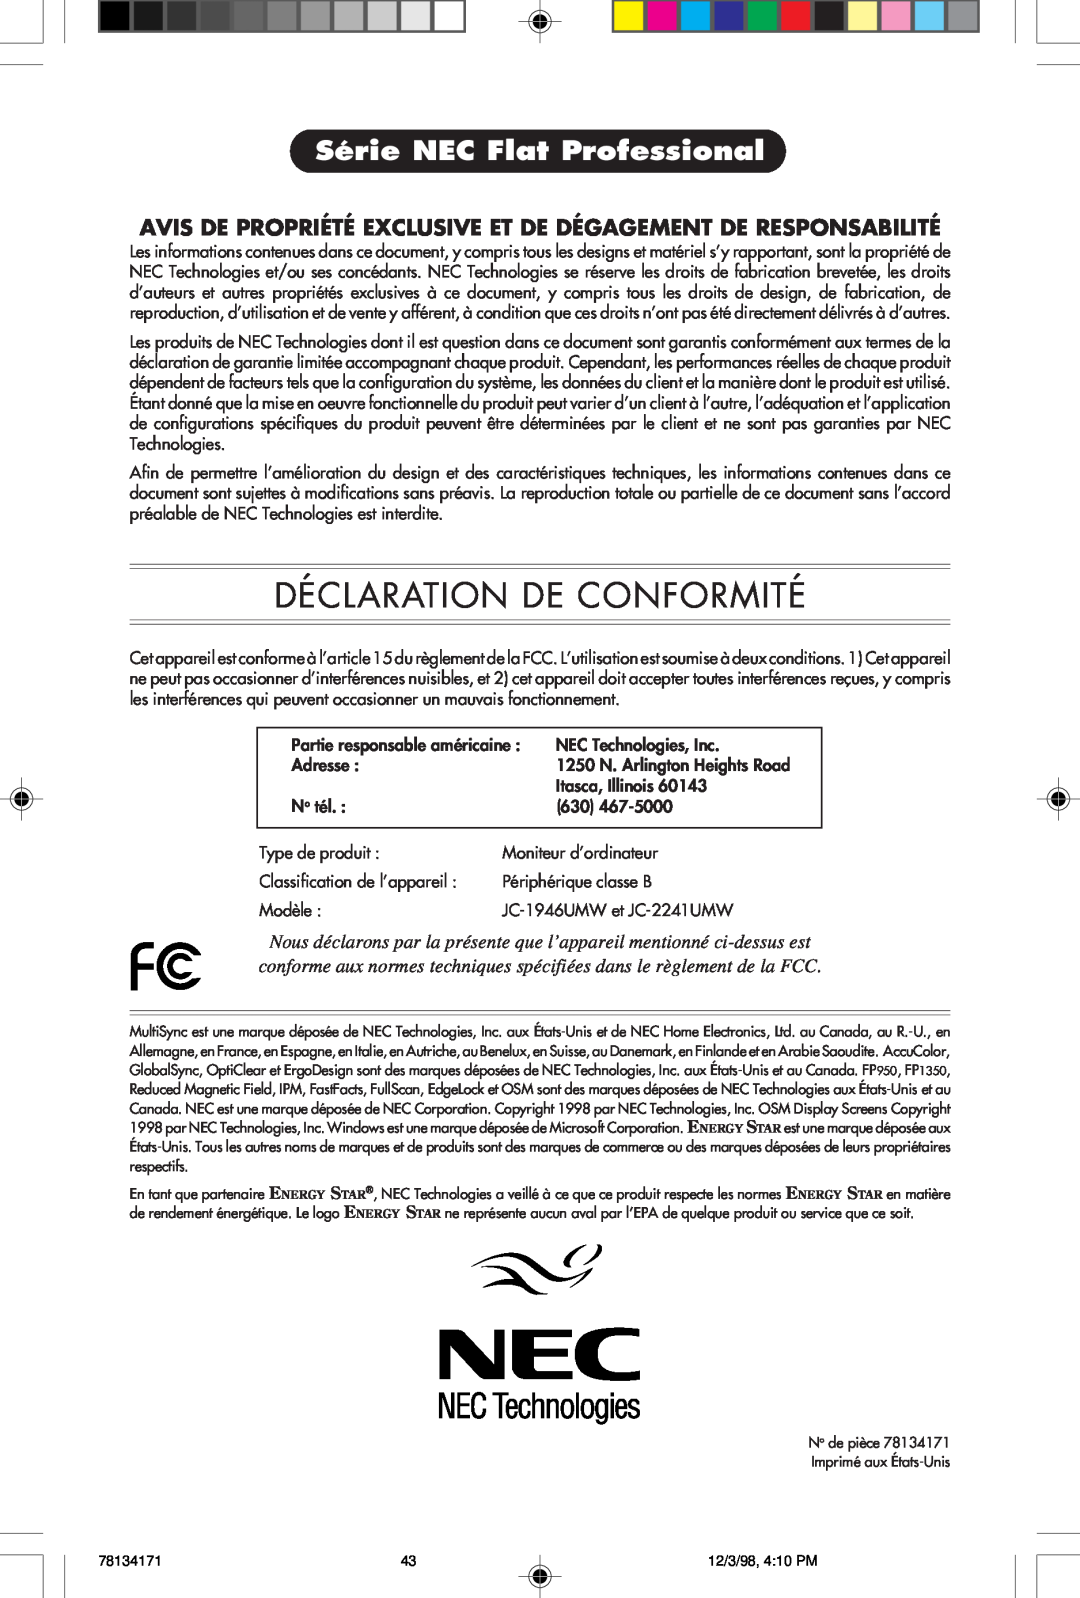 NEC JC-1946UMW, JC-2241UMW user manual Déclaration De Conformité, Série NEC Flat Professional 